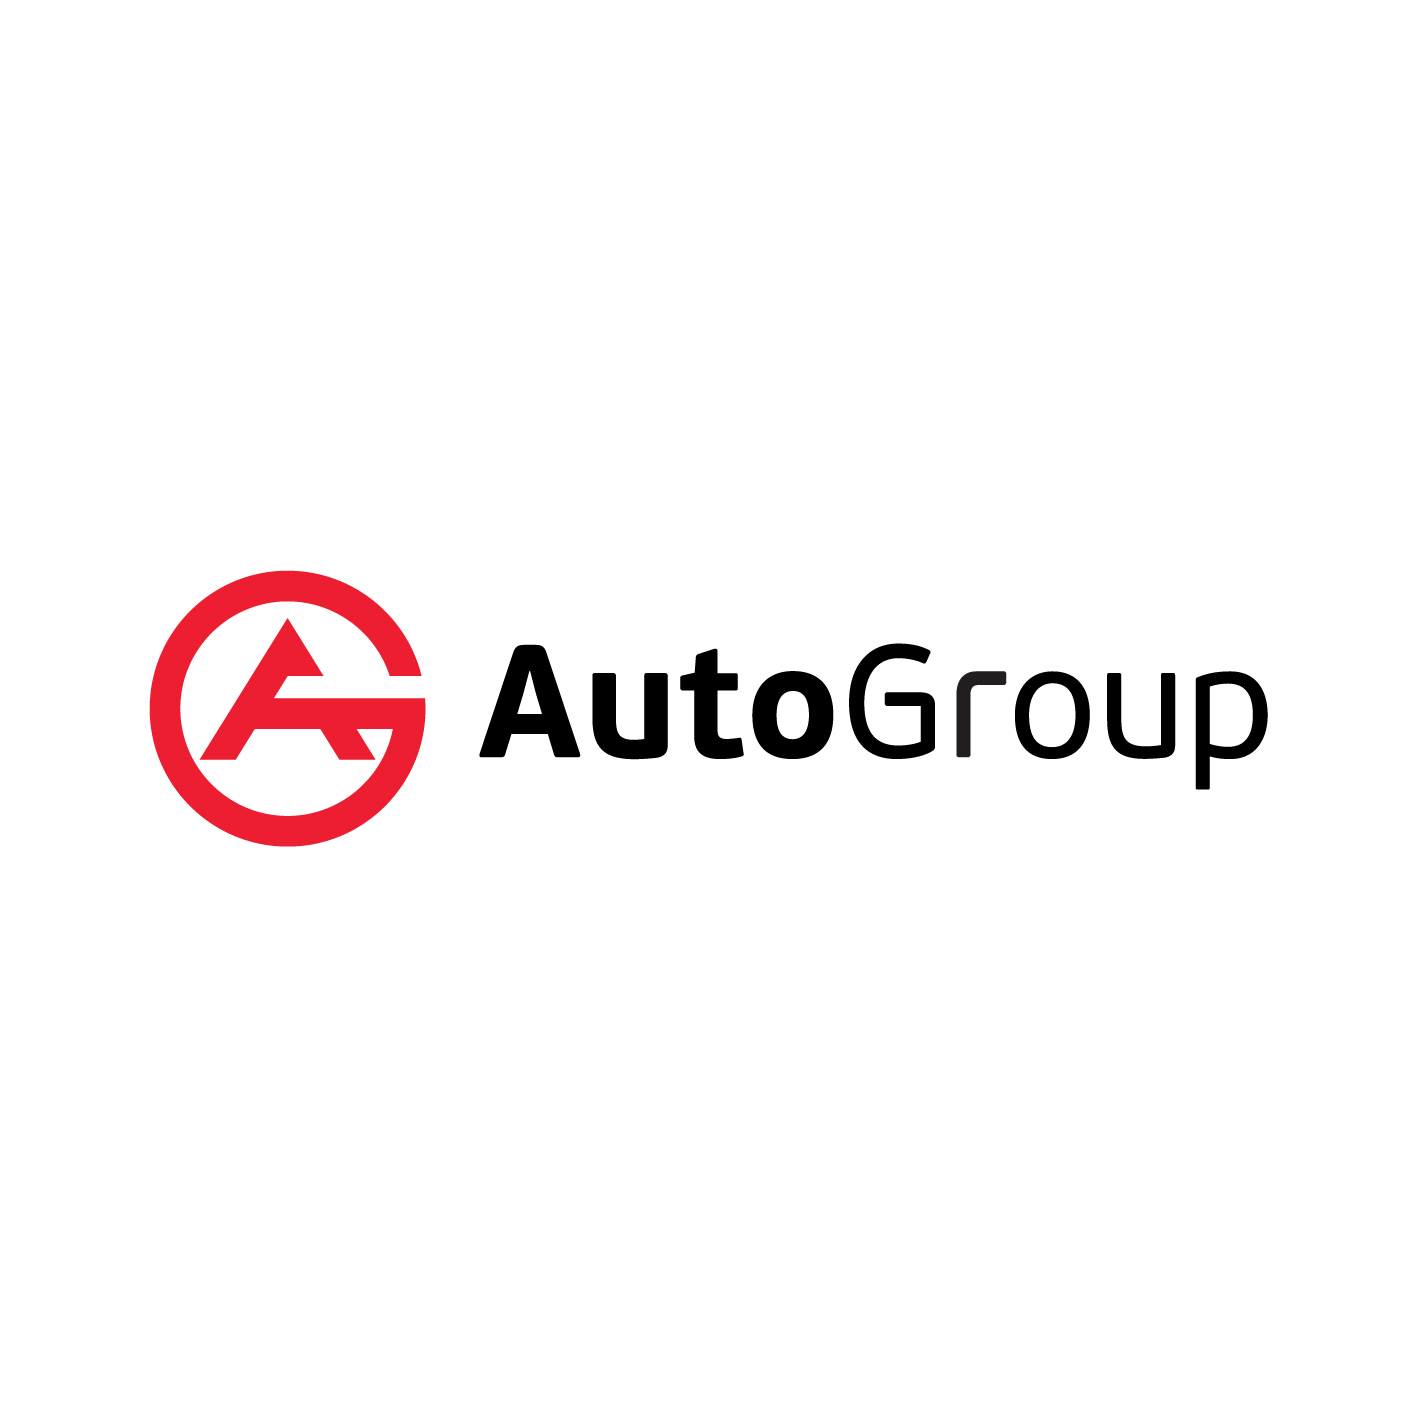 AutoGroup